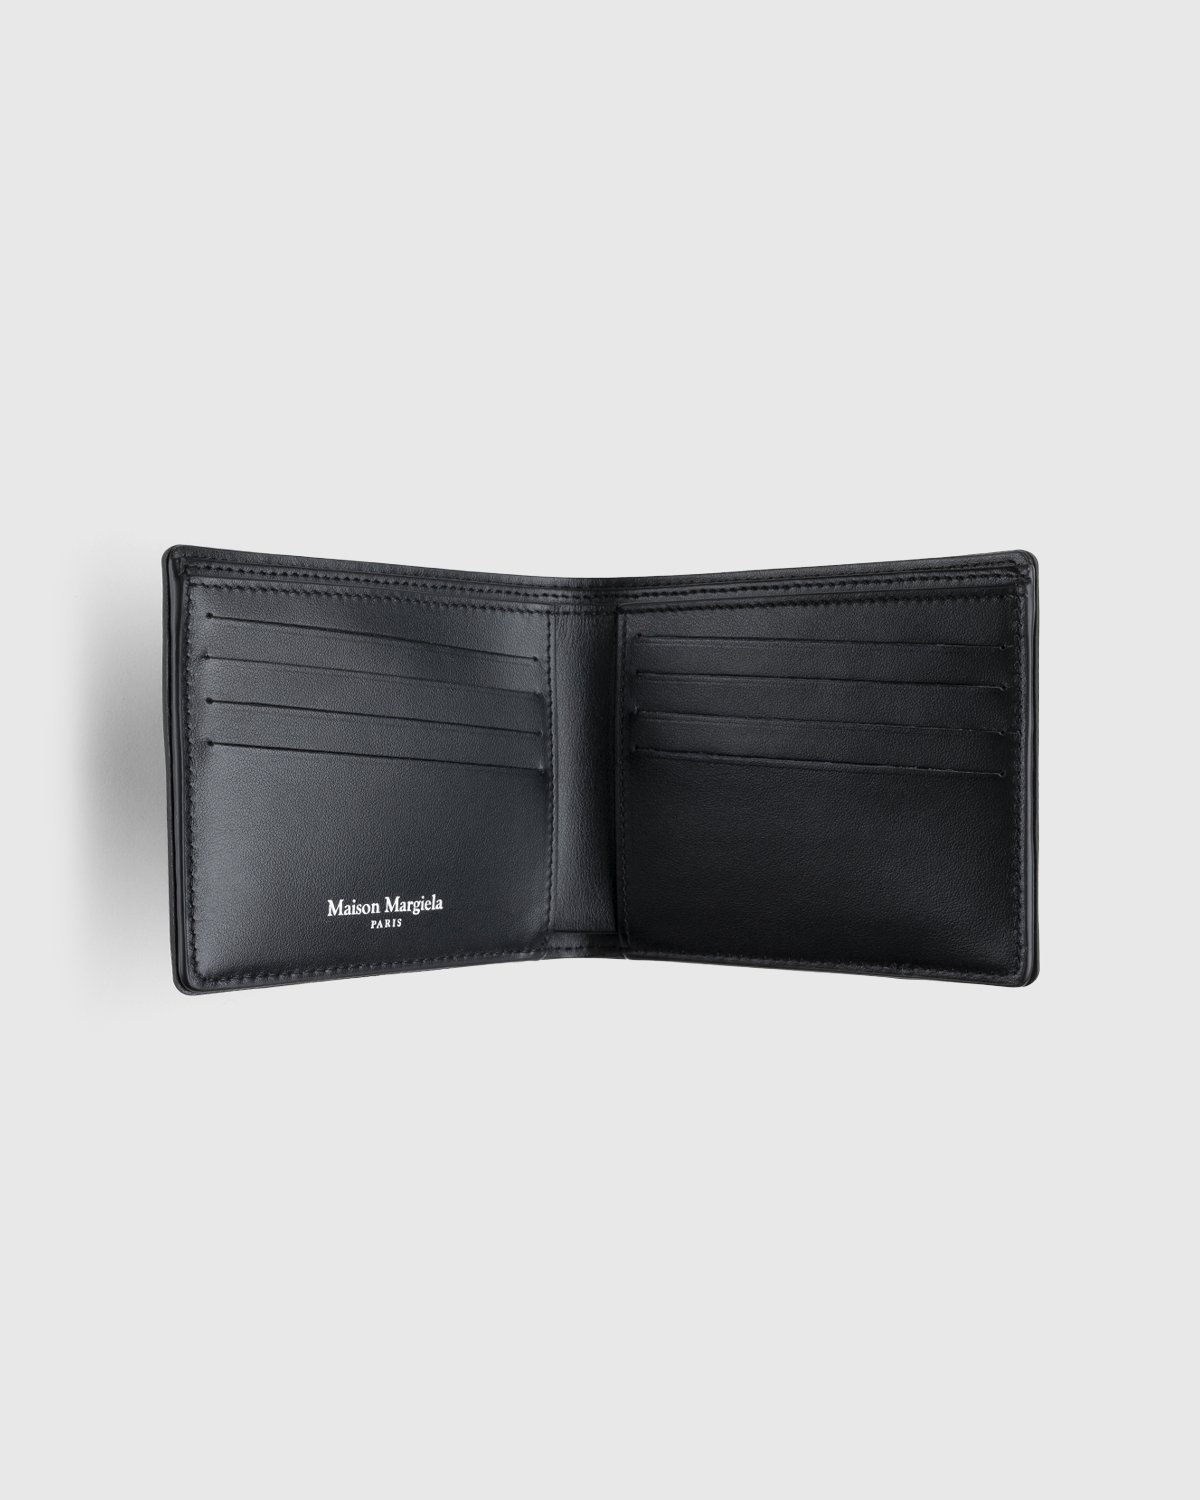 Maison Margiela – Bi-Fold Wallet Black - Wallets - Black - Image 3